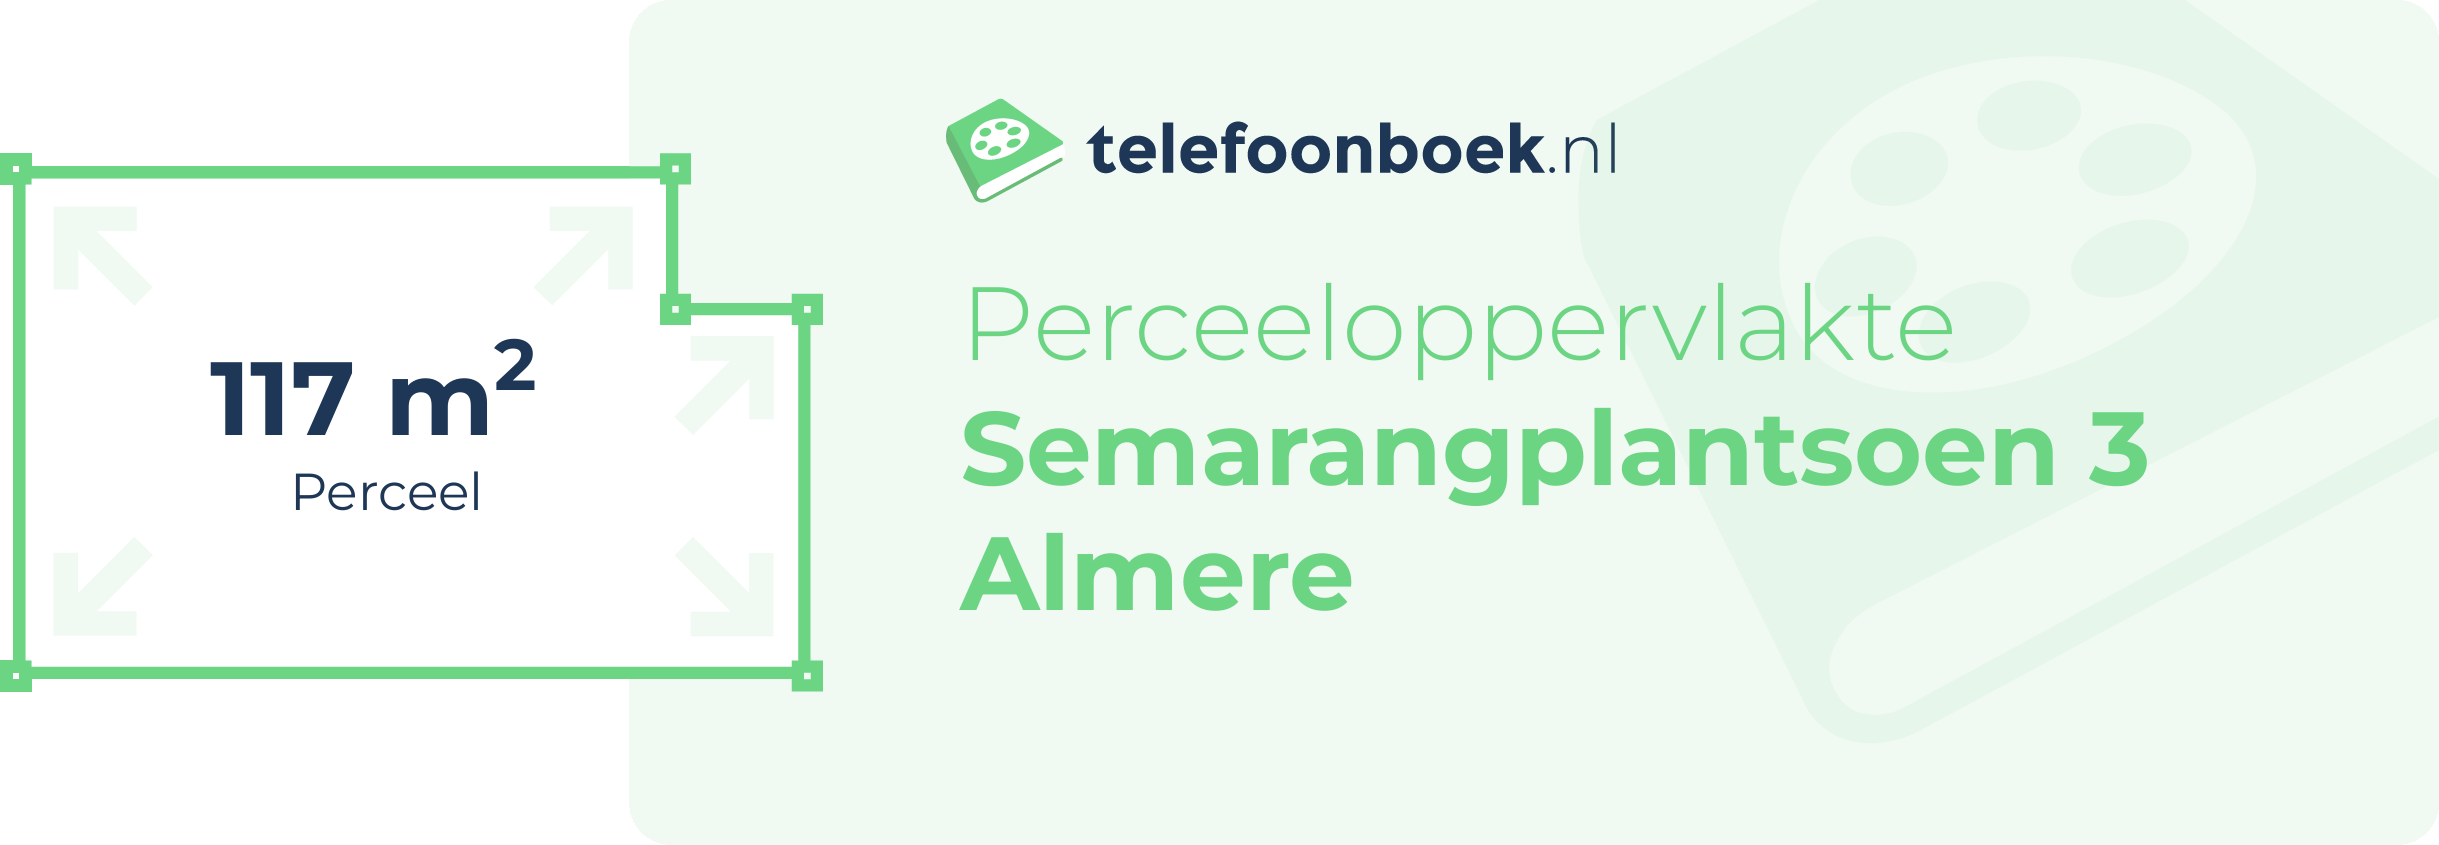 Perceeloppervlakte Semarangplantsoen 3 Almere